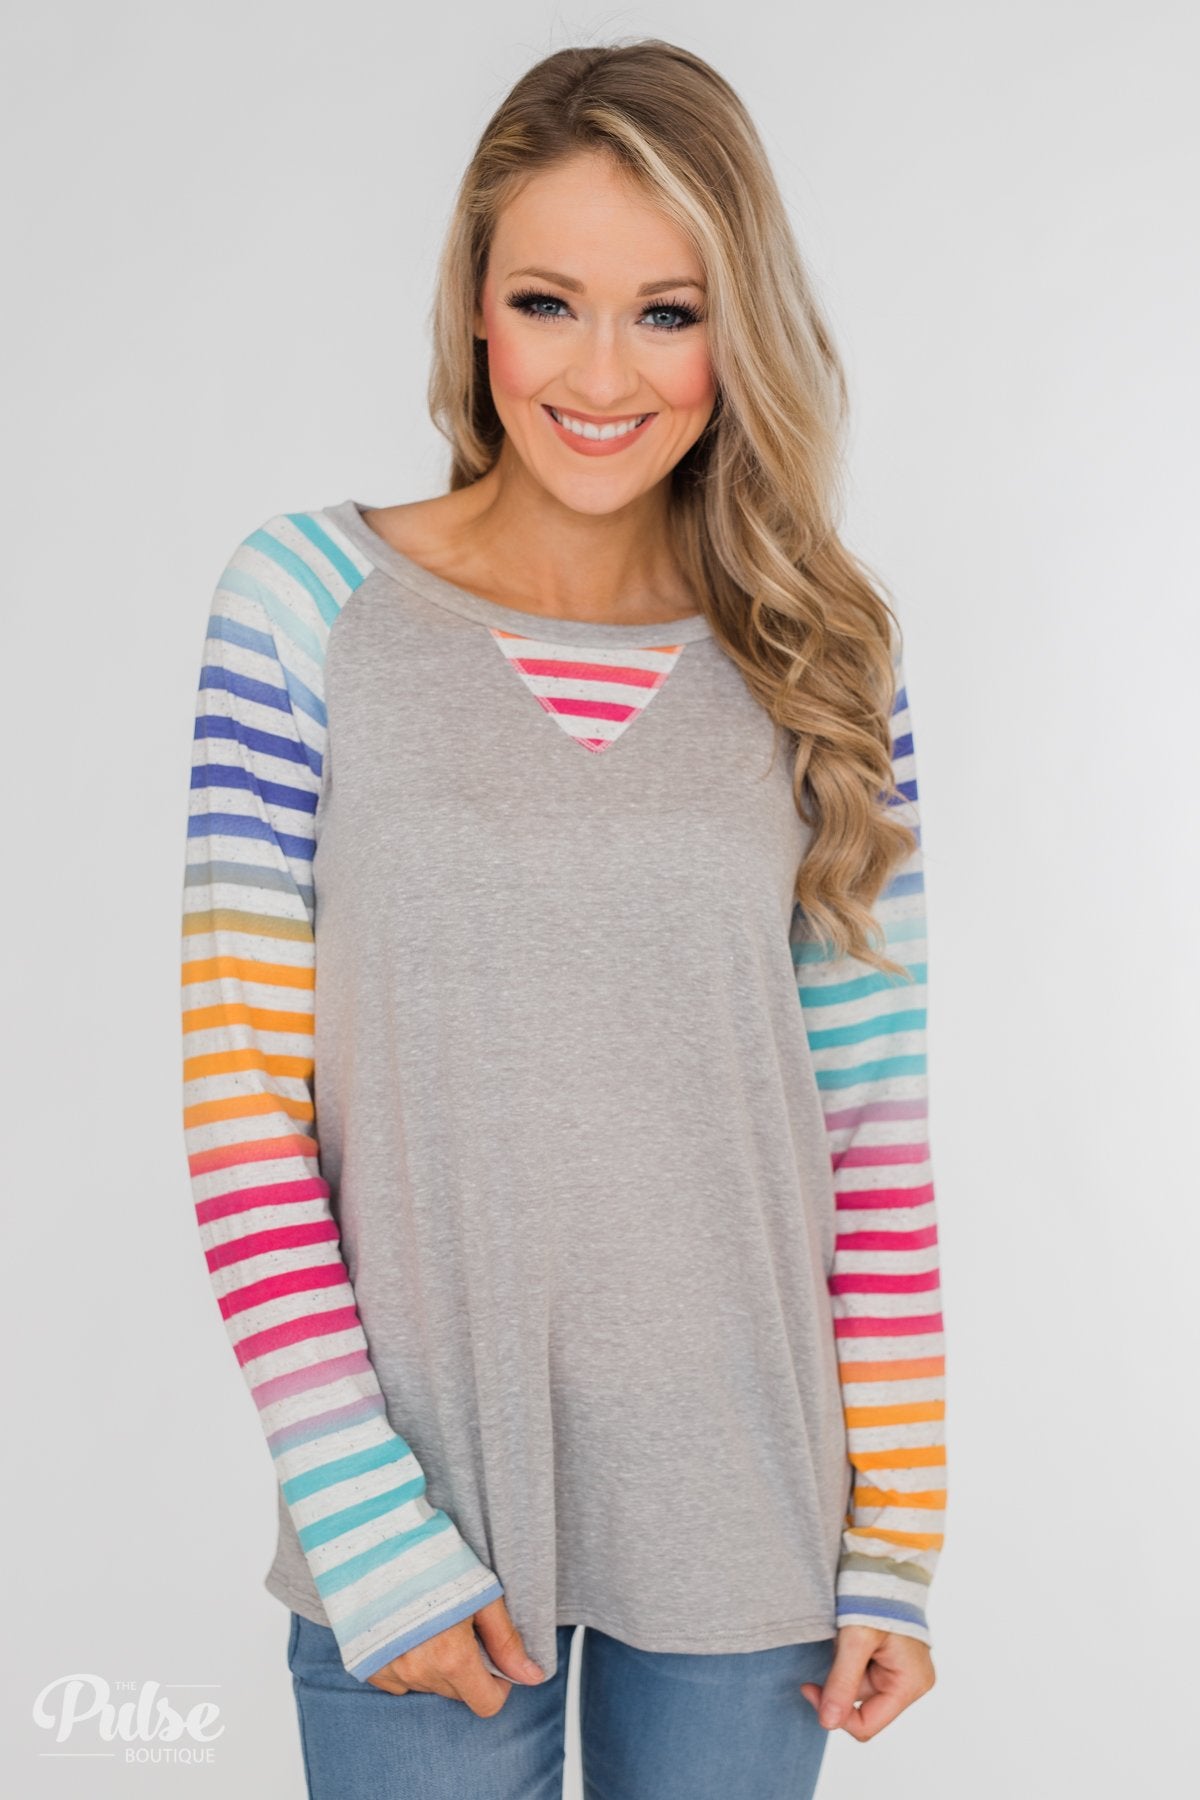 Multi-Colored Striped Sleeve Raglan Top- Grey